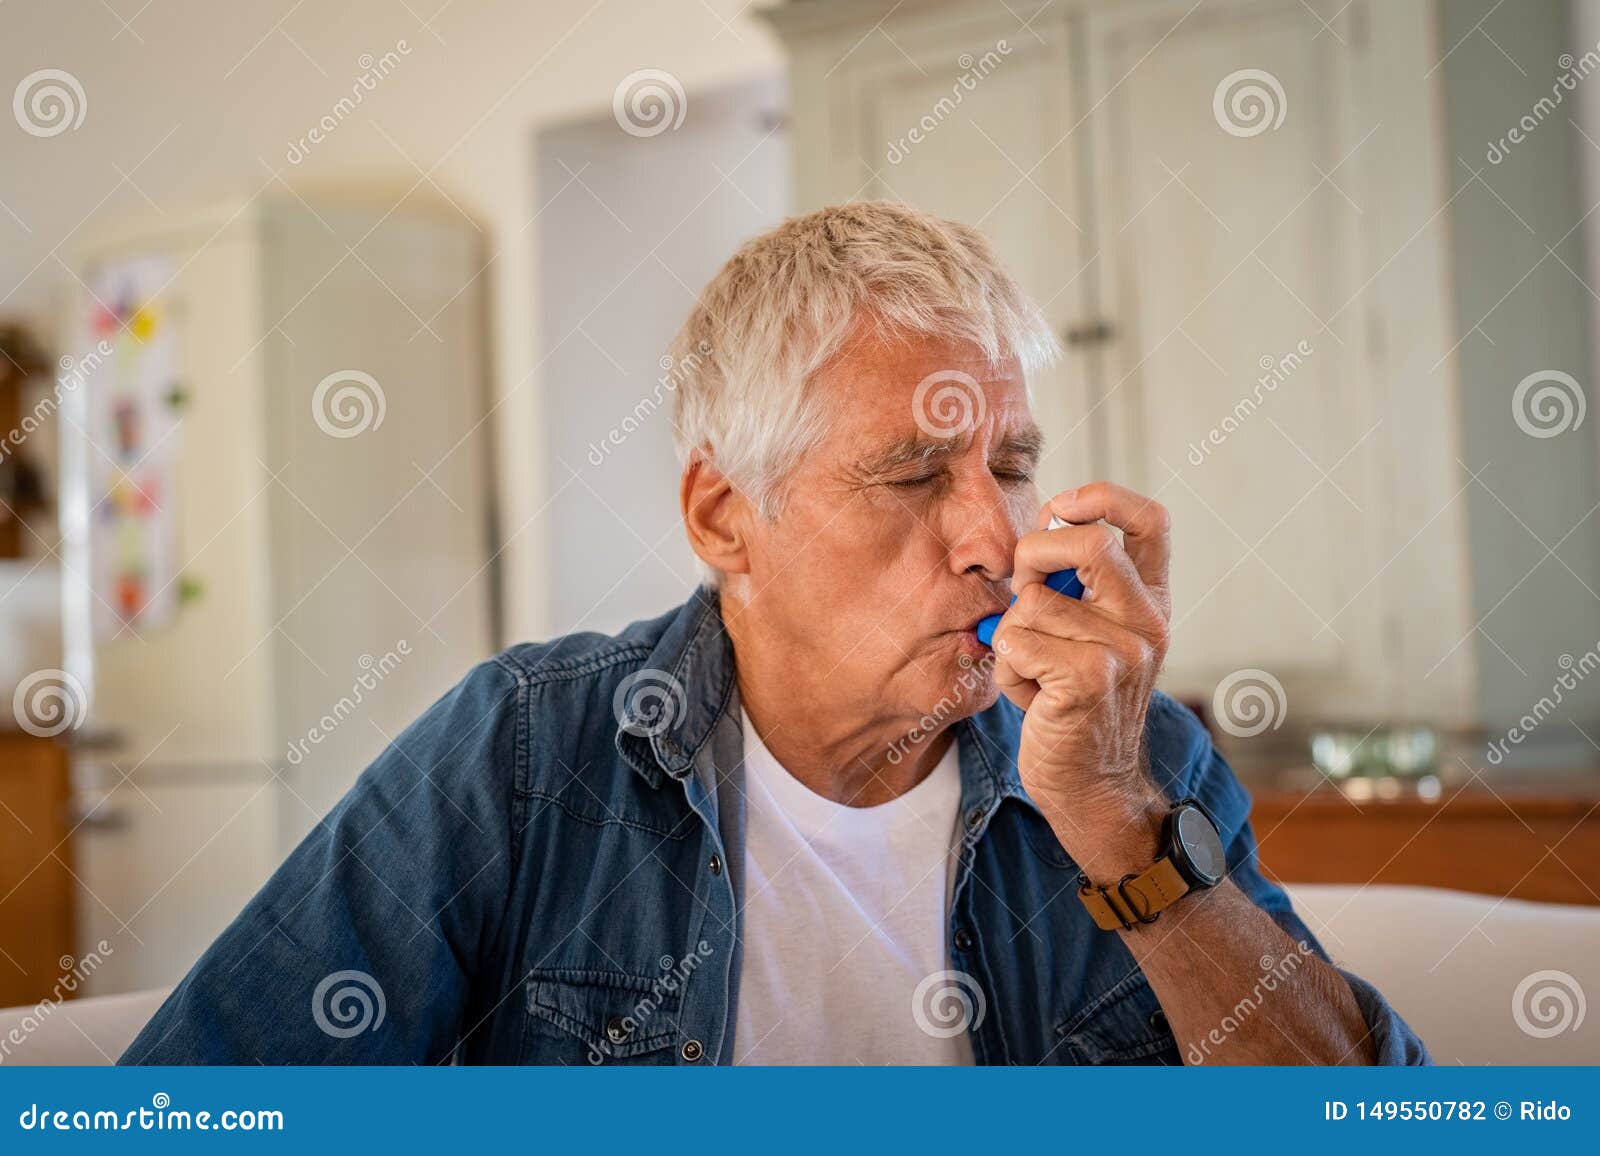 senior man using asthma pump